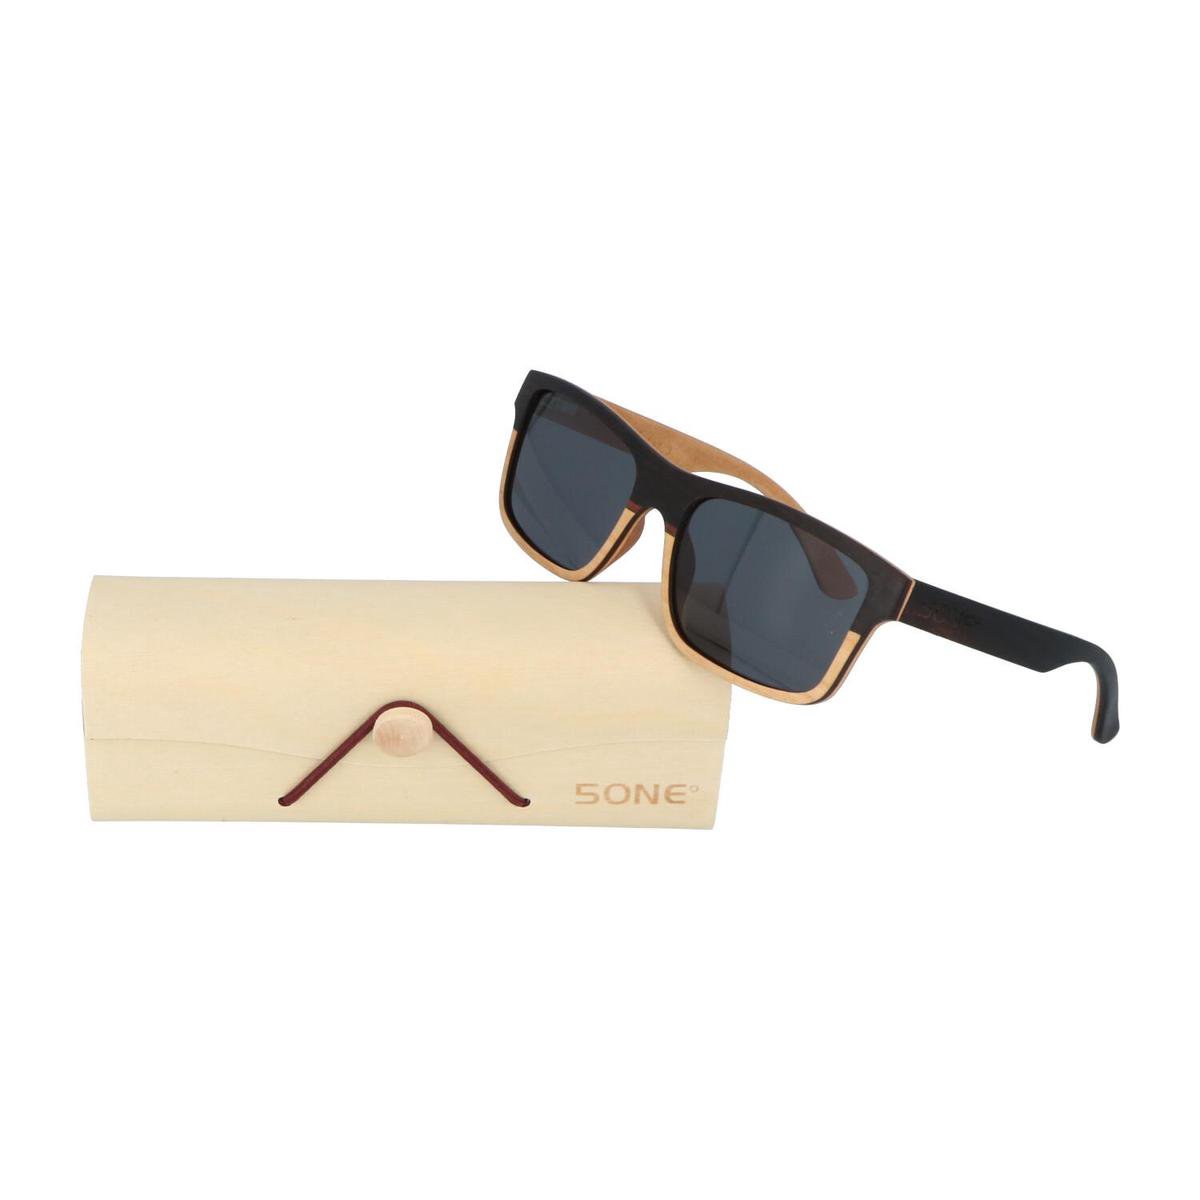 5one® 2-tone - Ebony / Maple-wood Houten zonnebril met Grijze lens